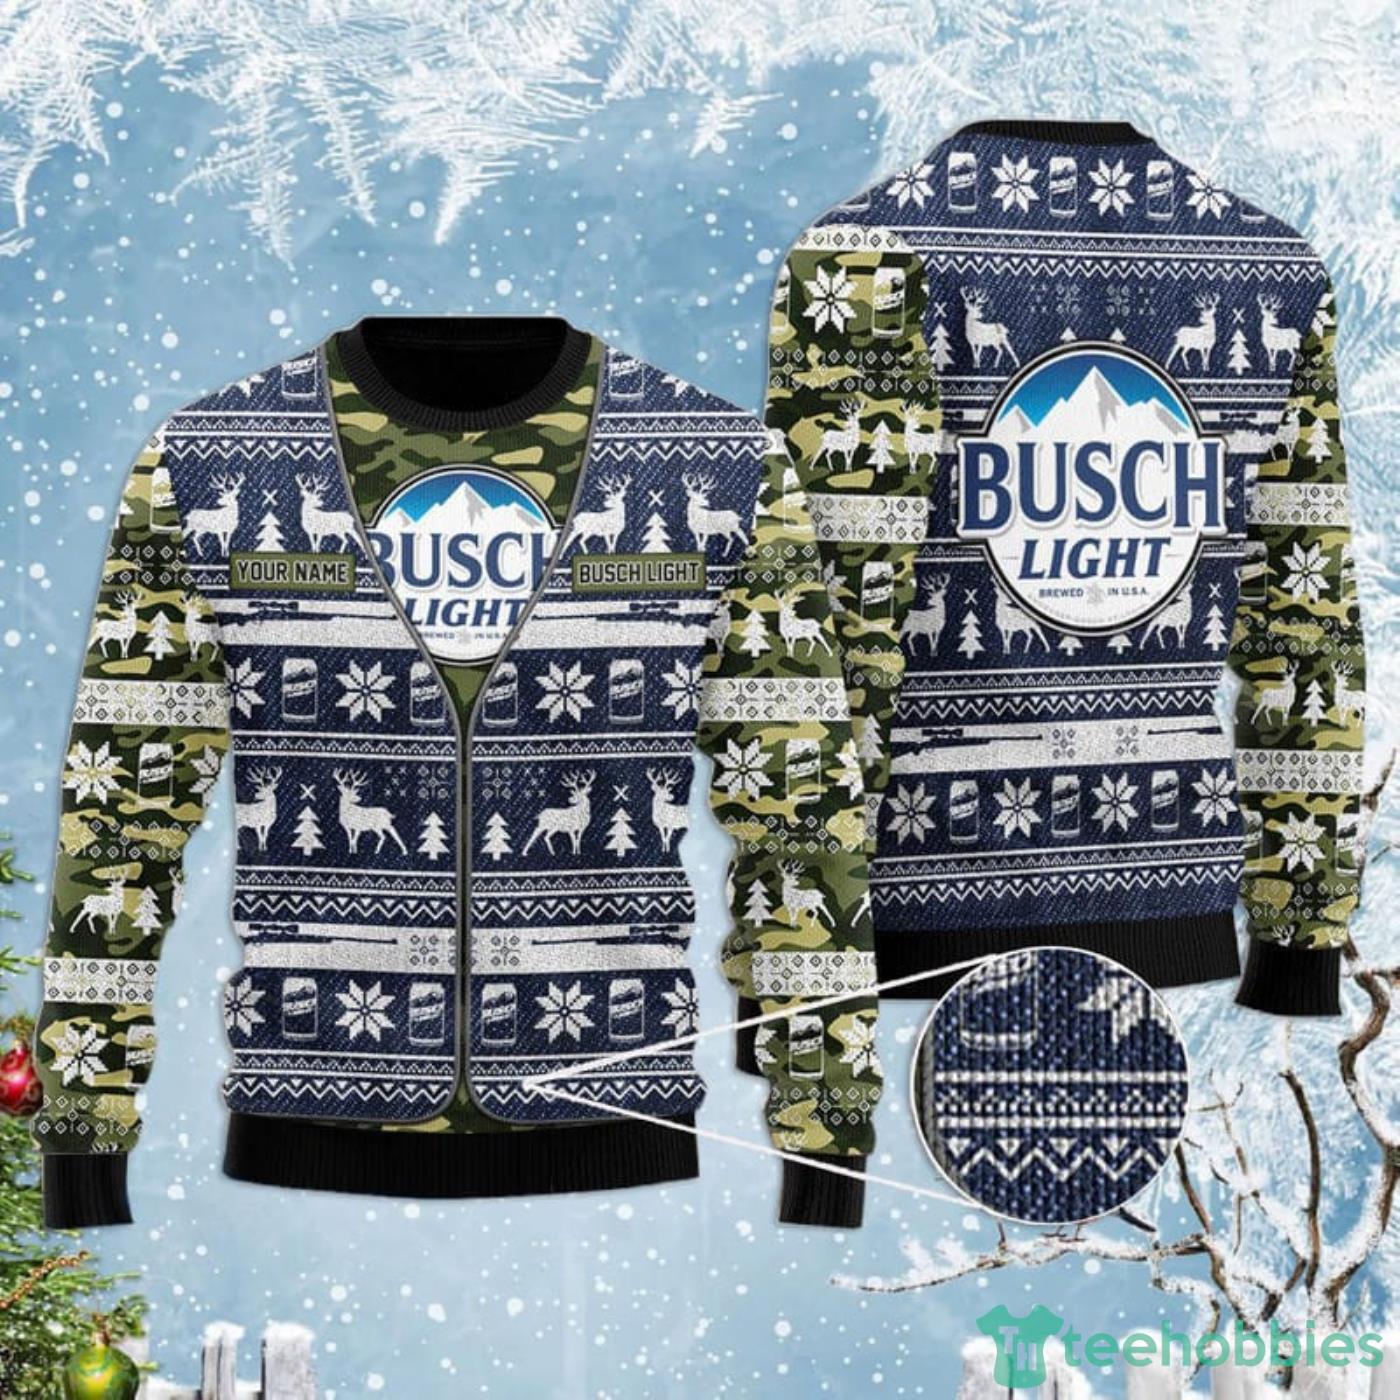 Key West University Custom Ugly Christmas Sweater - EmonShop - Tagotee